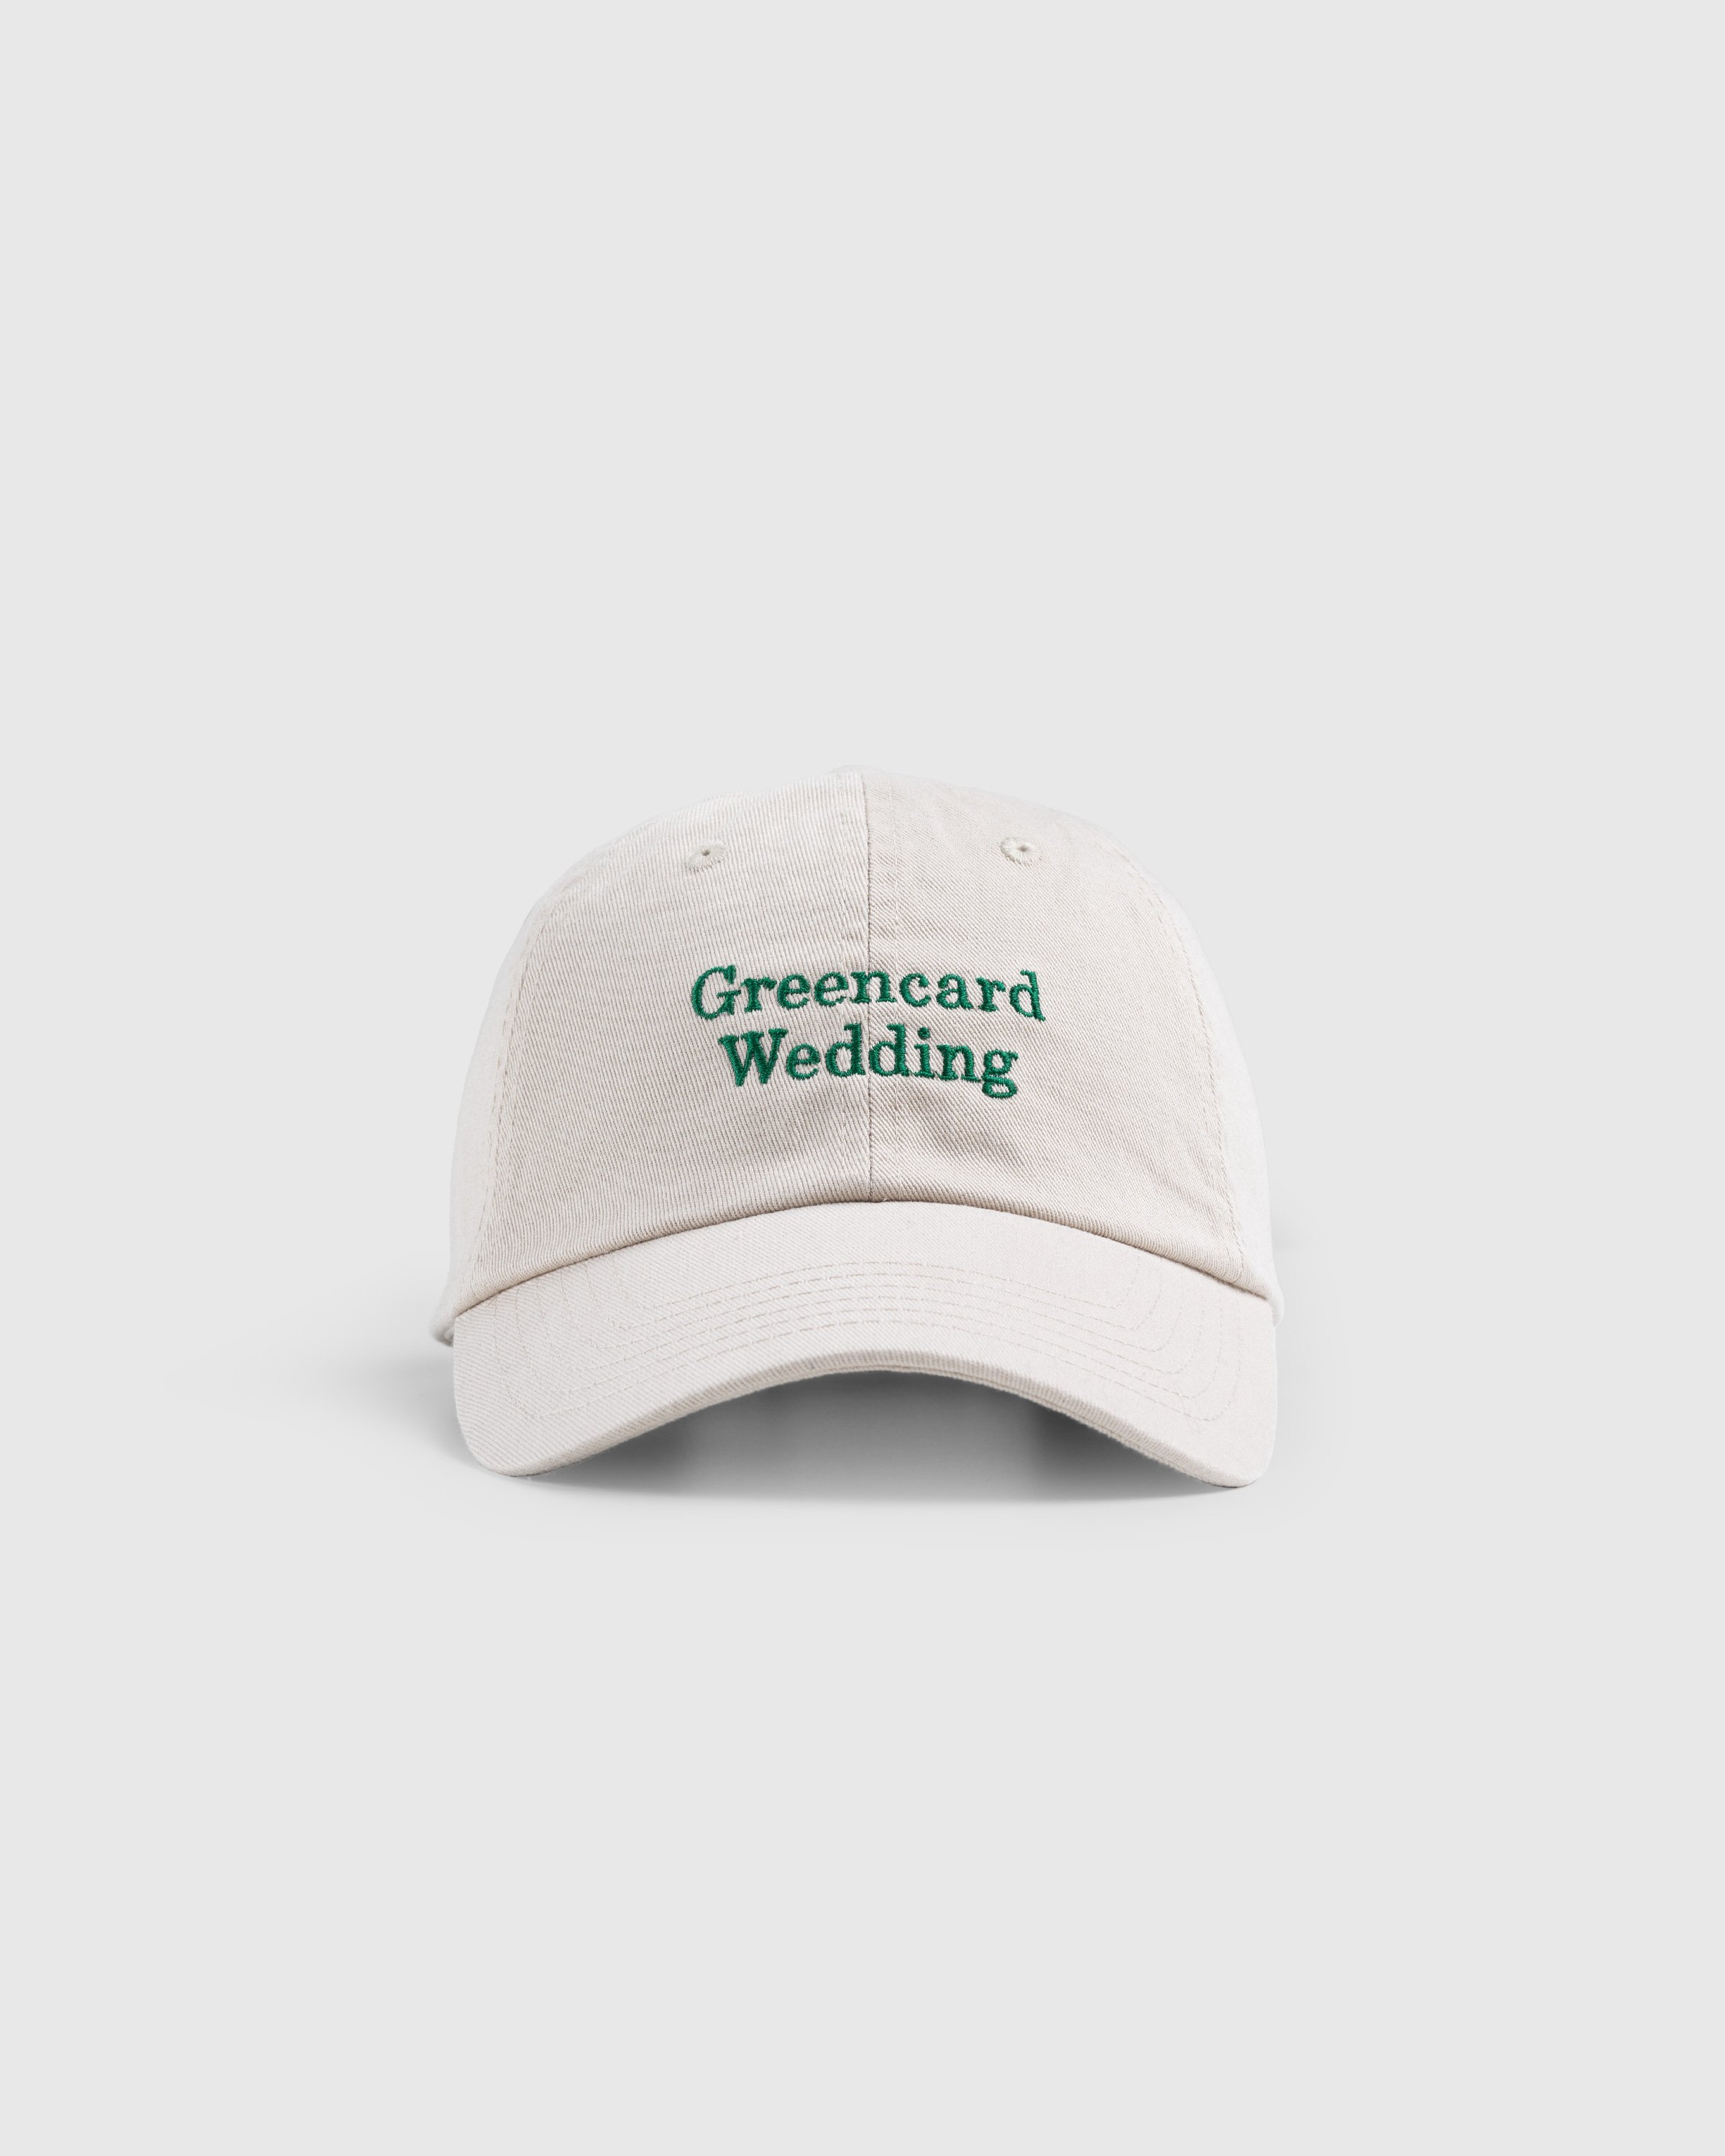 HO HO COCO - Greencard Wedding Cap Beige - Accessories - Beige - Image 2